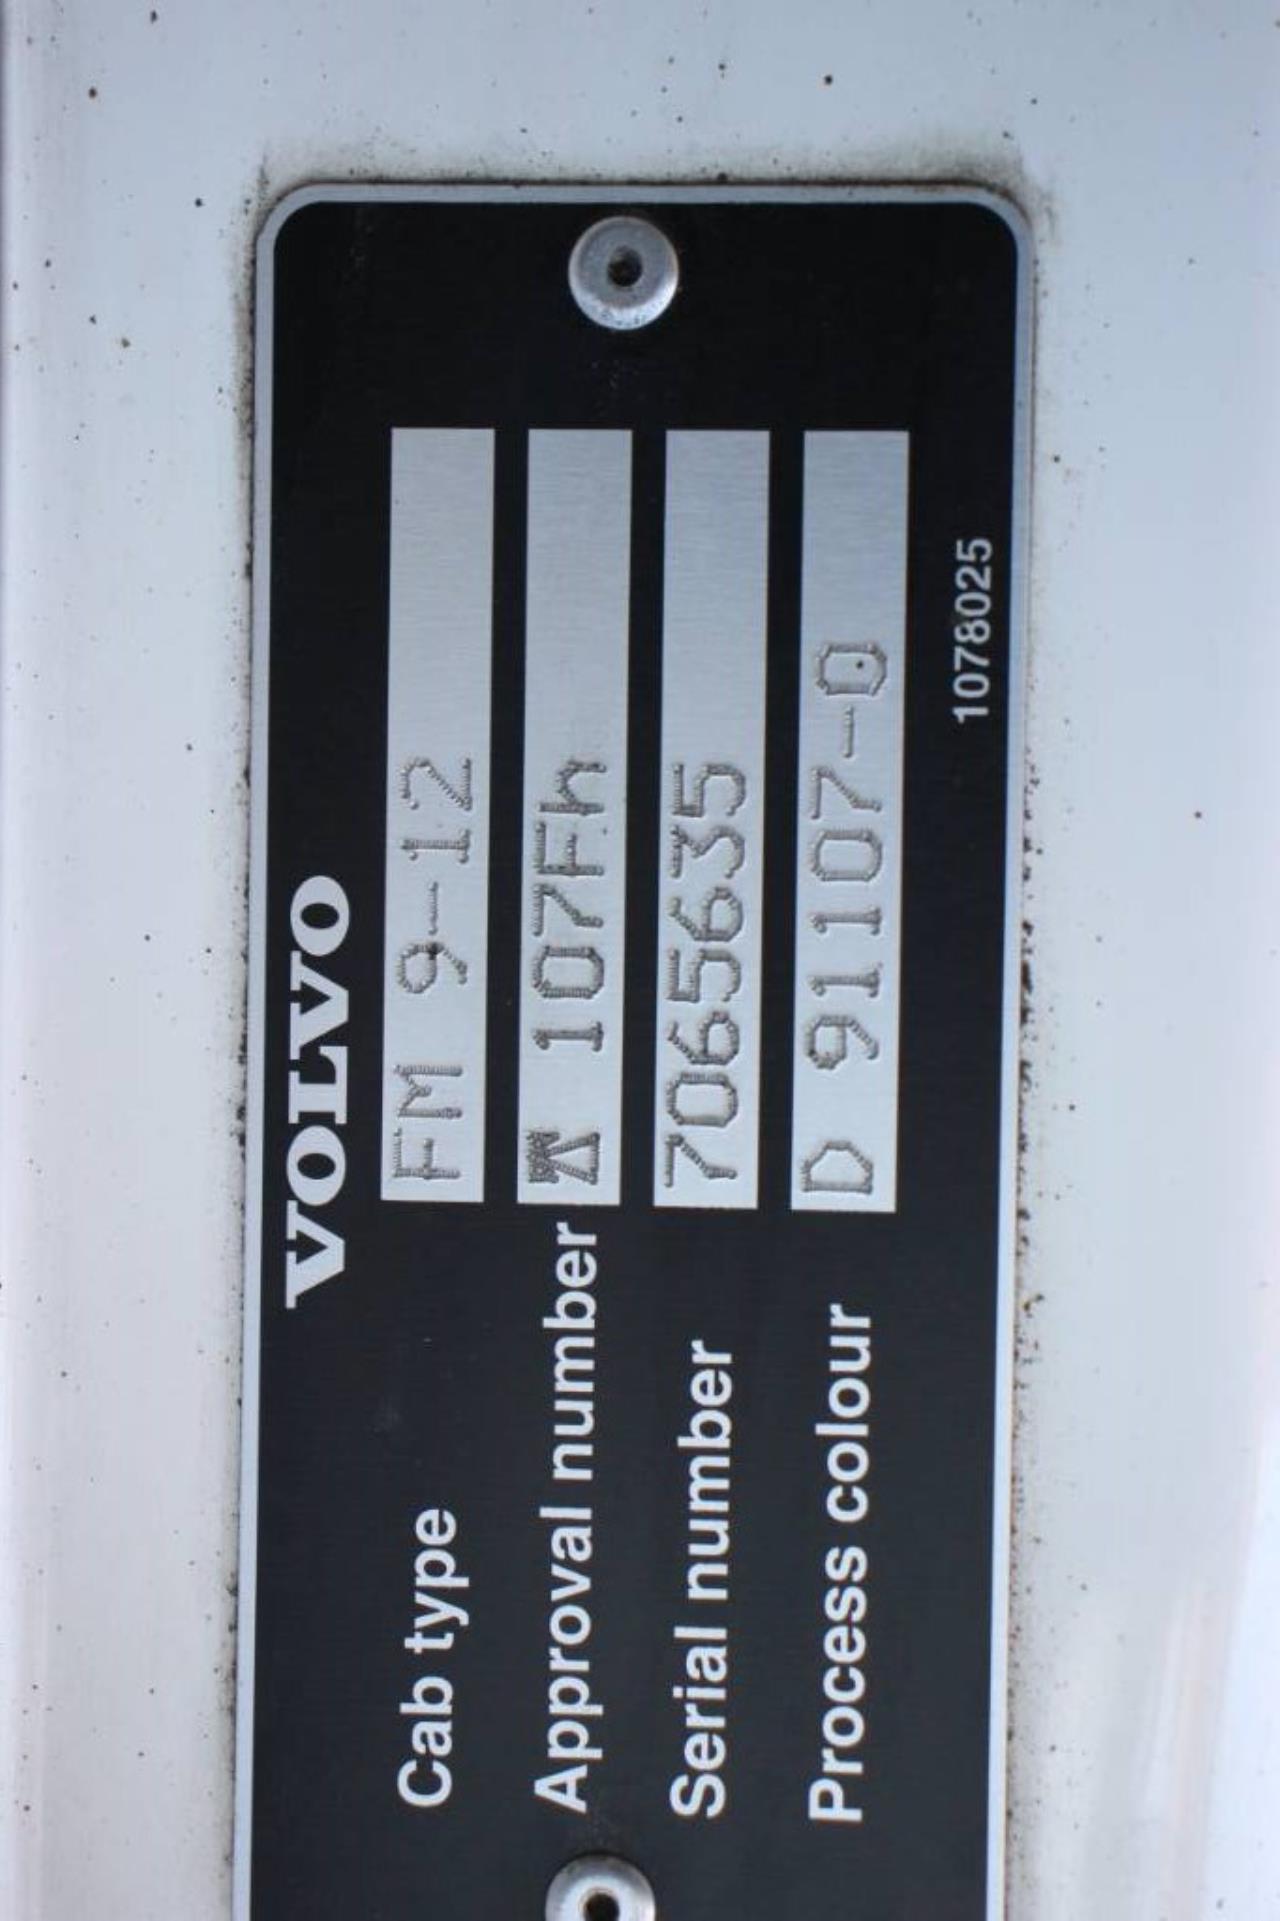 Volvo FM9 300 6X2 2003 - Demonteringsobjekt